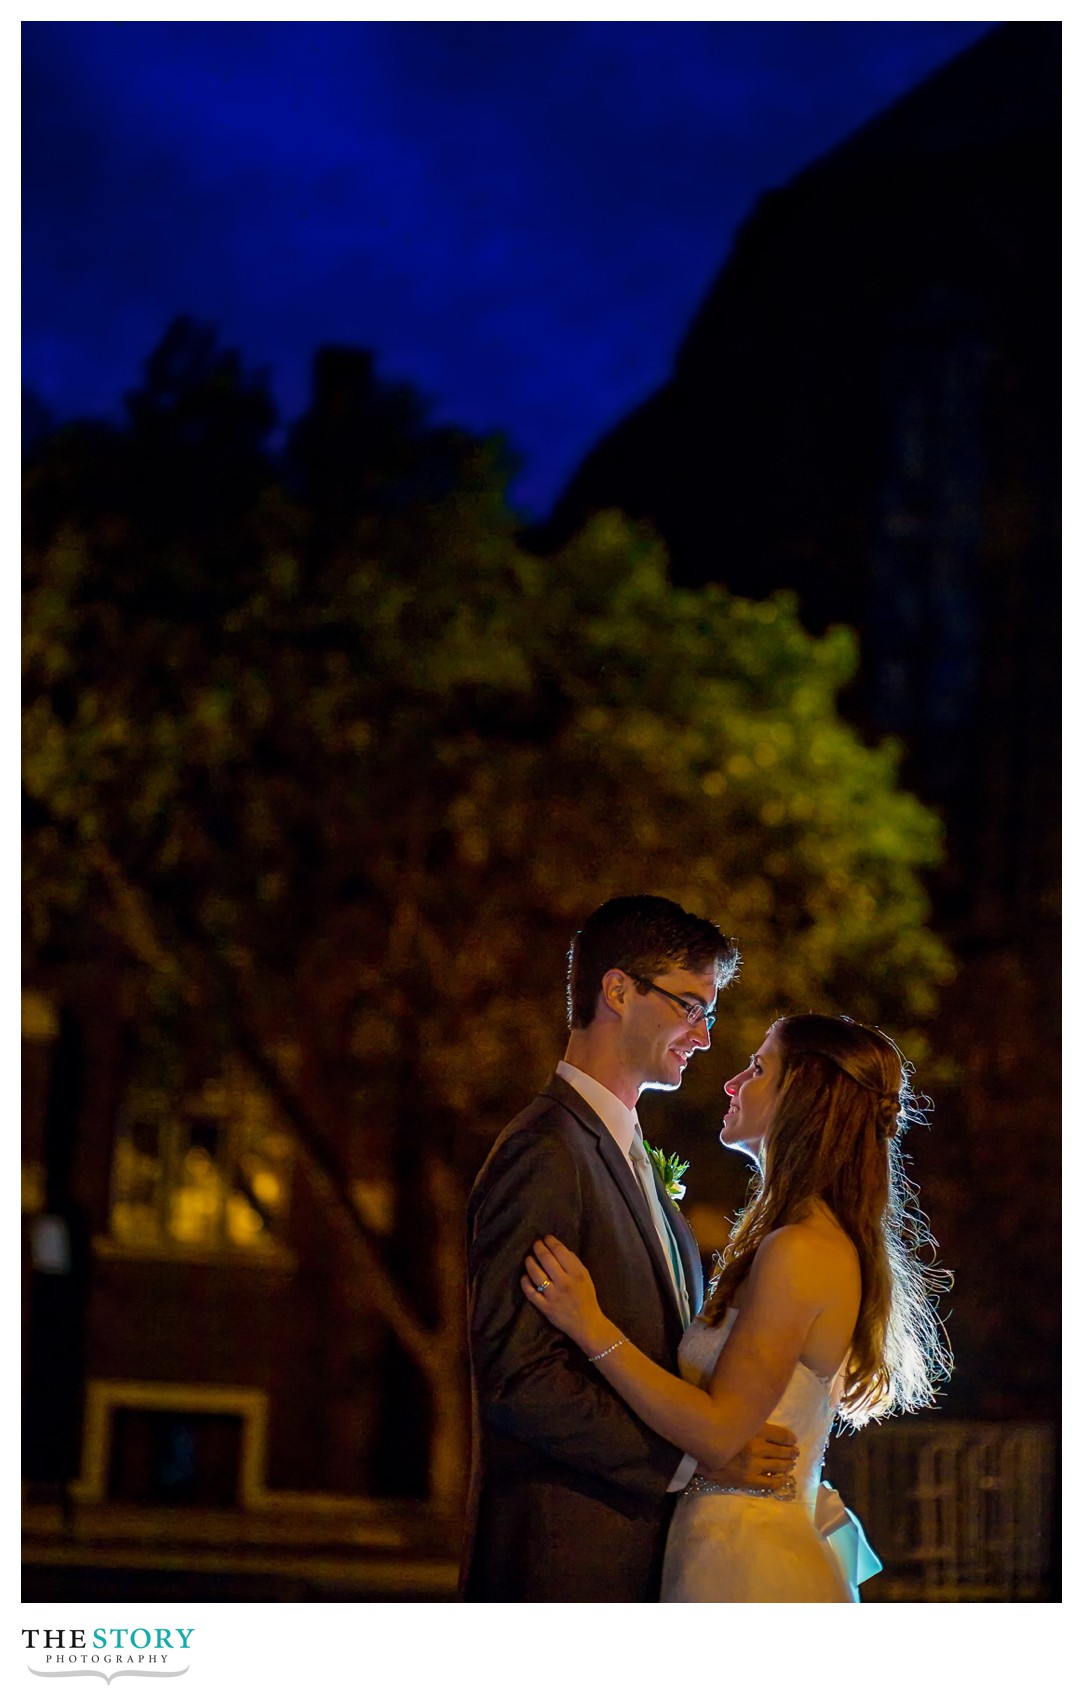 night wedding photo outside inn on broadway in Rochester